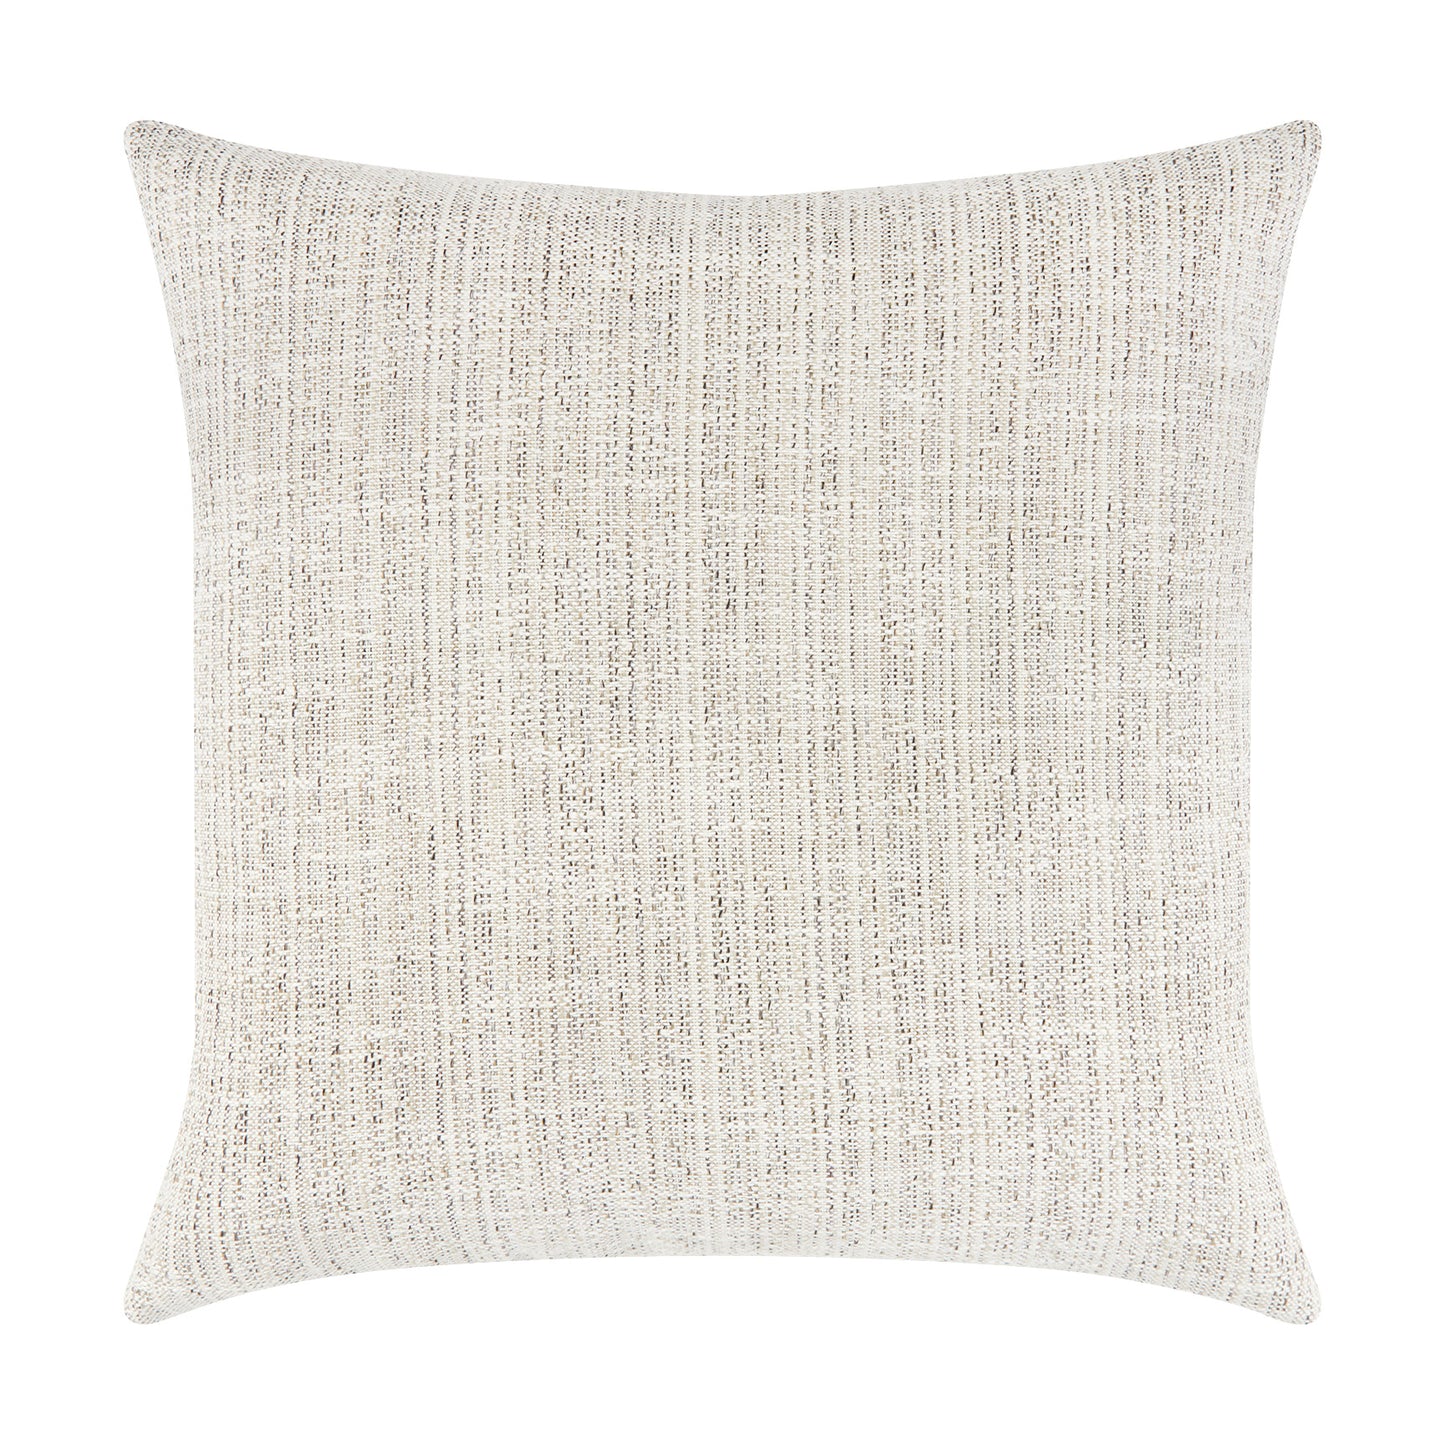 20" Square Elaine Smith Pillow  Fusion Linen